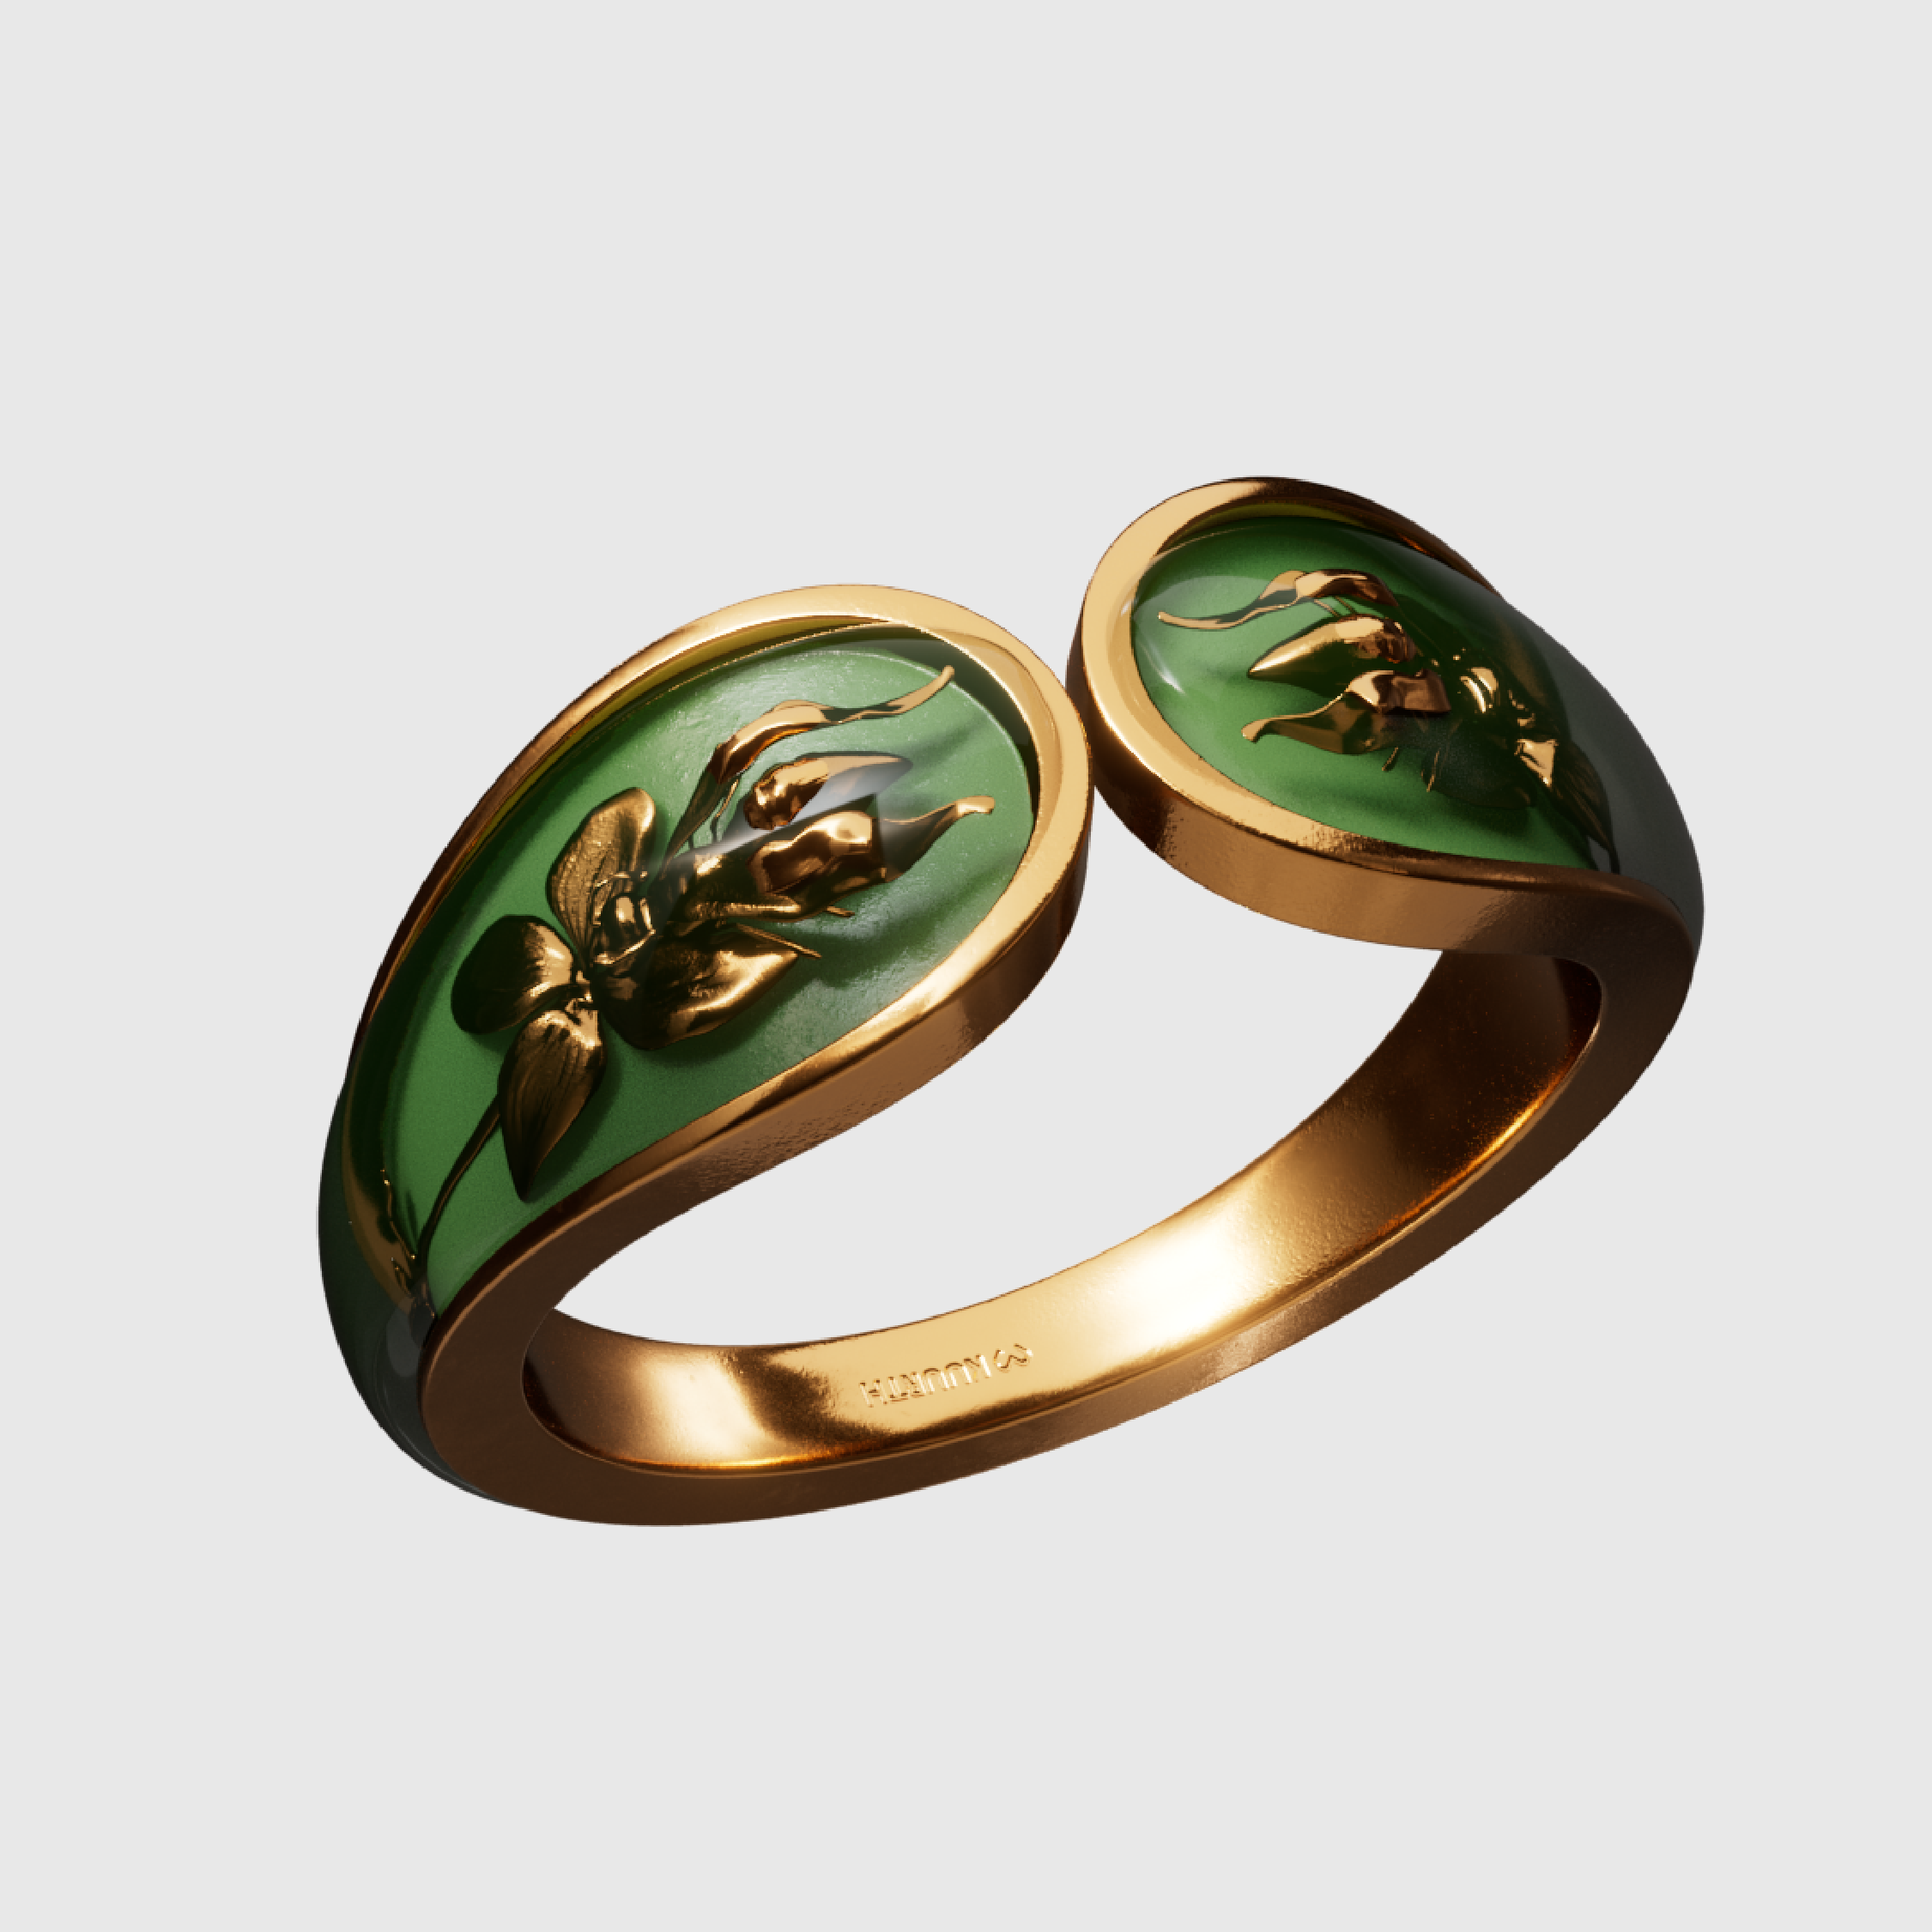 Buy 22KT Gold Finger Ring Online | Exclusive Finger Ring designs for Women  | PC Chandra